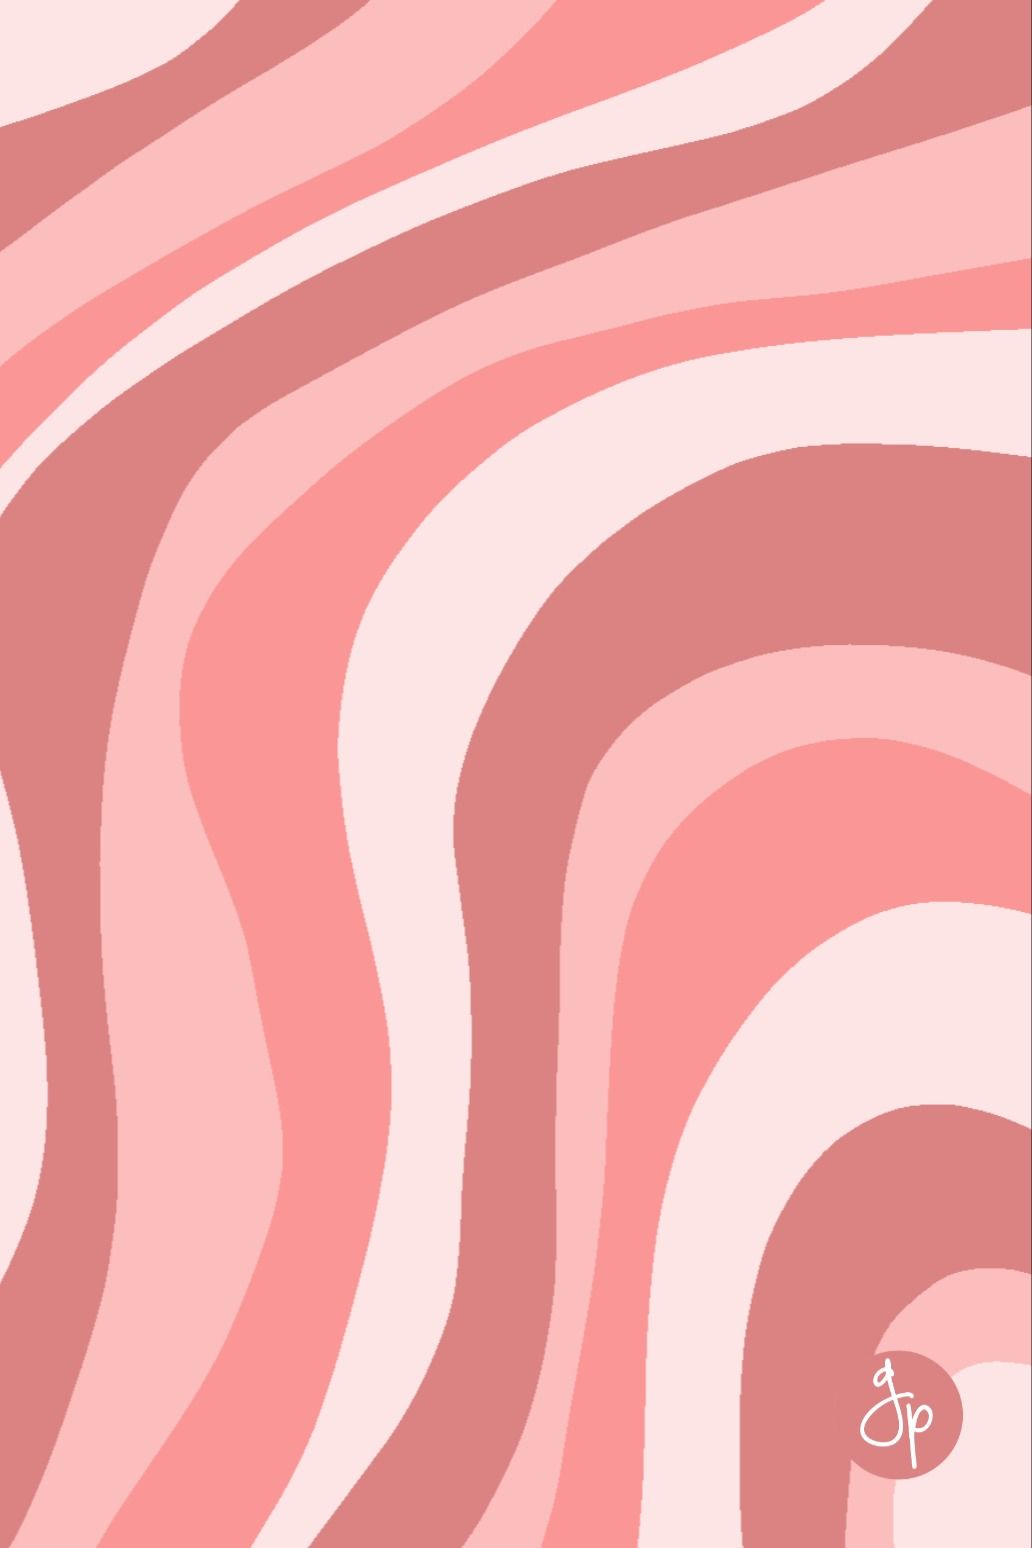 Free Wallpaper Print Download. Abstract Wallpaper Design, Cute Patterns Wallpaper, Pink Wallpaper